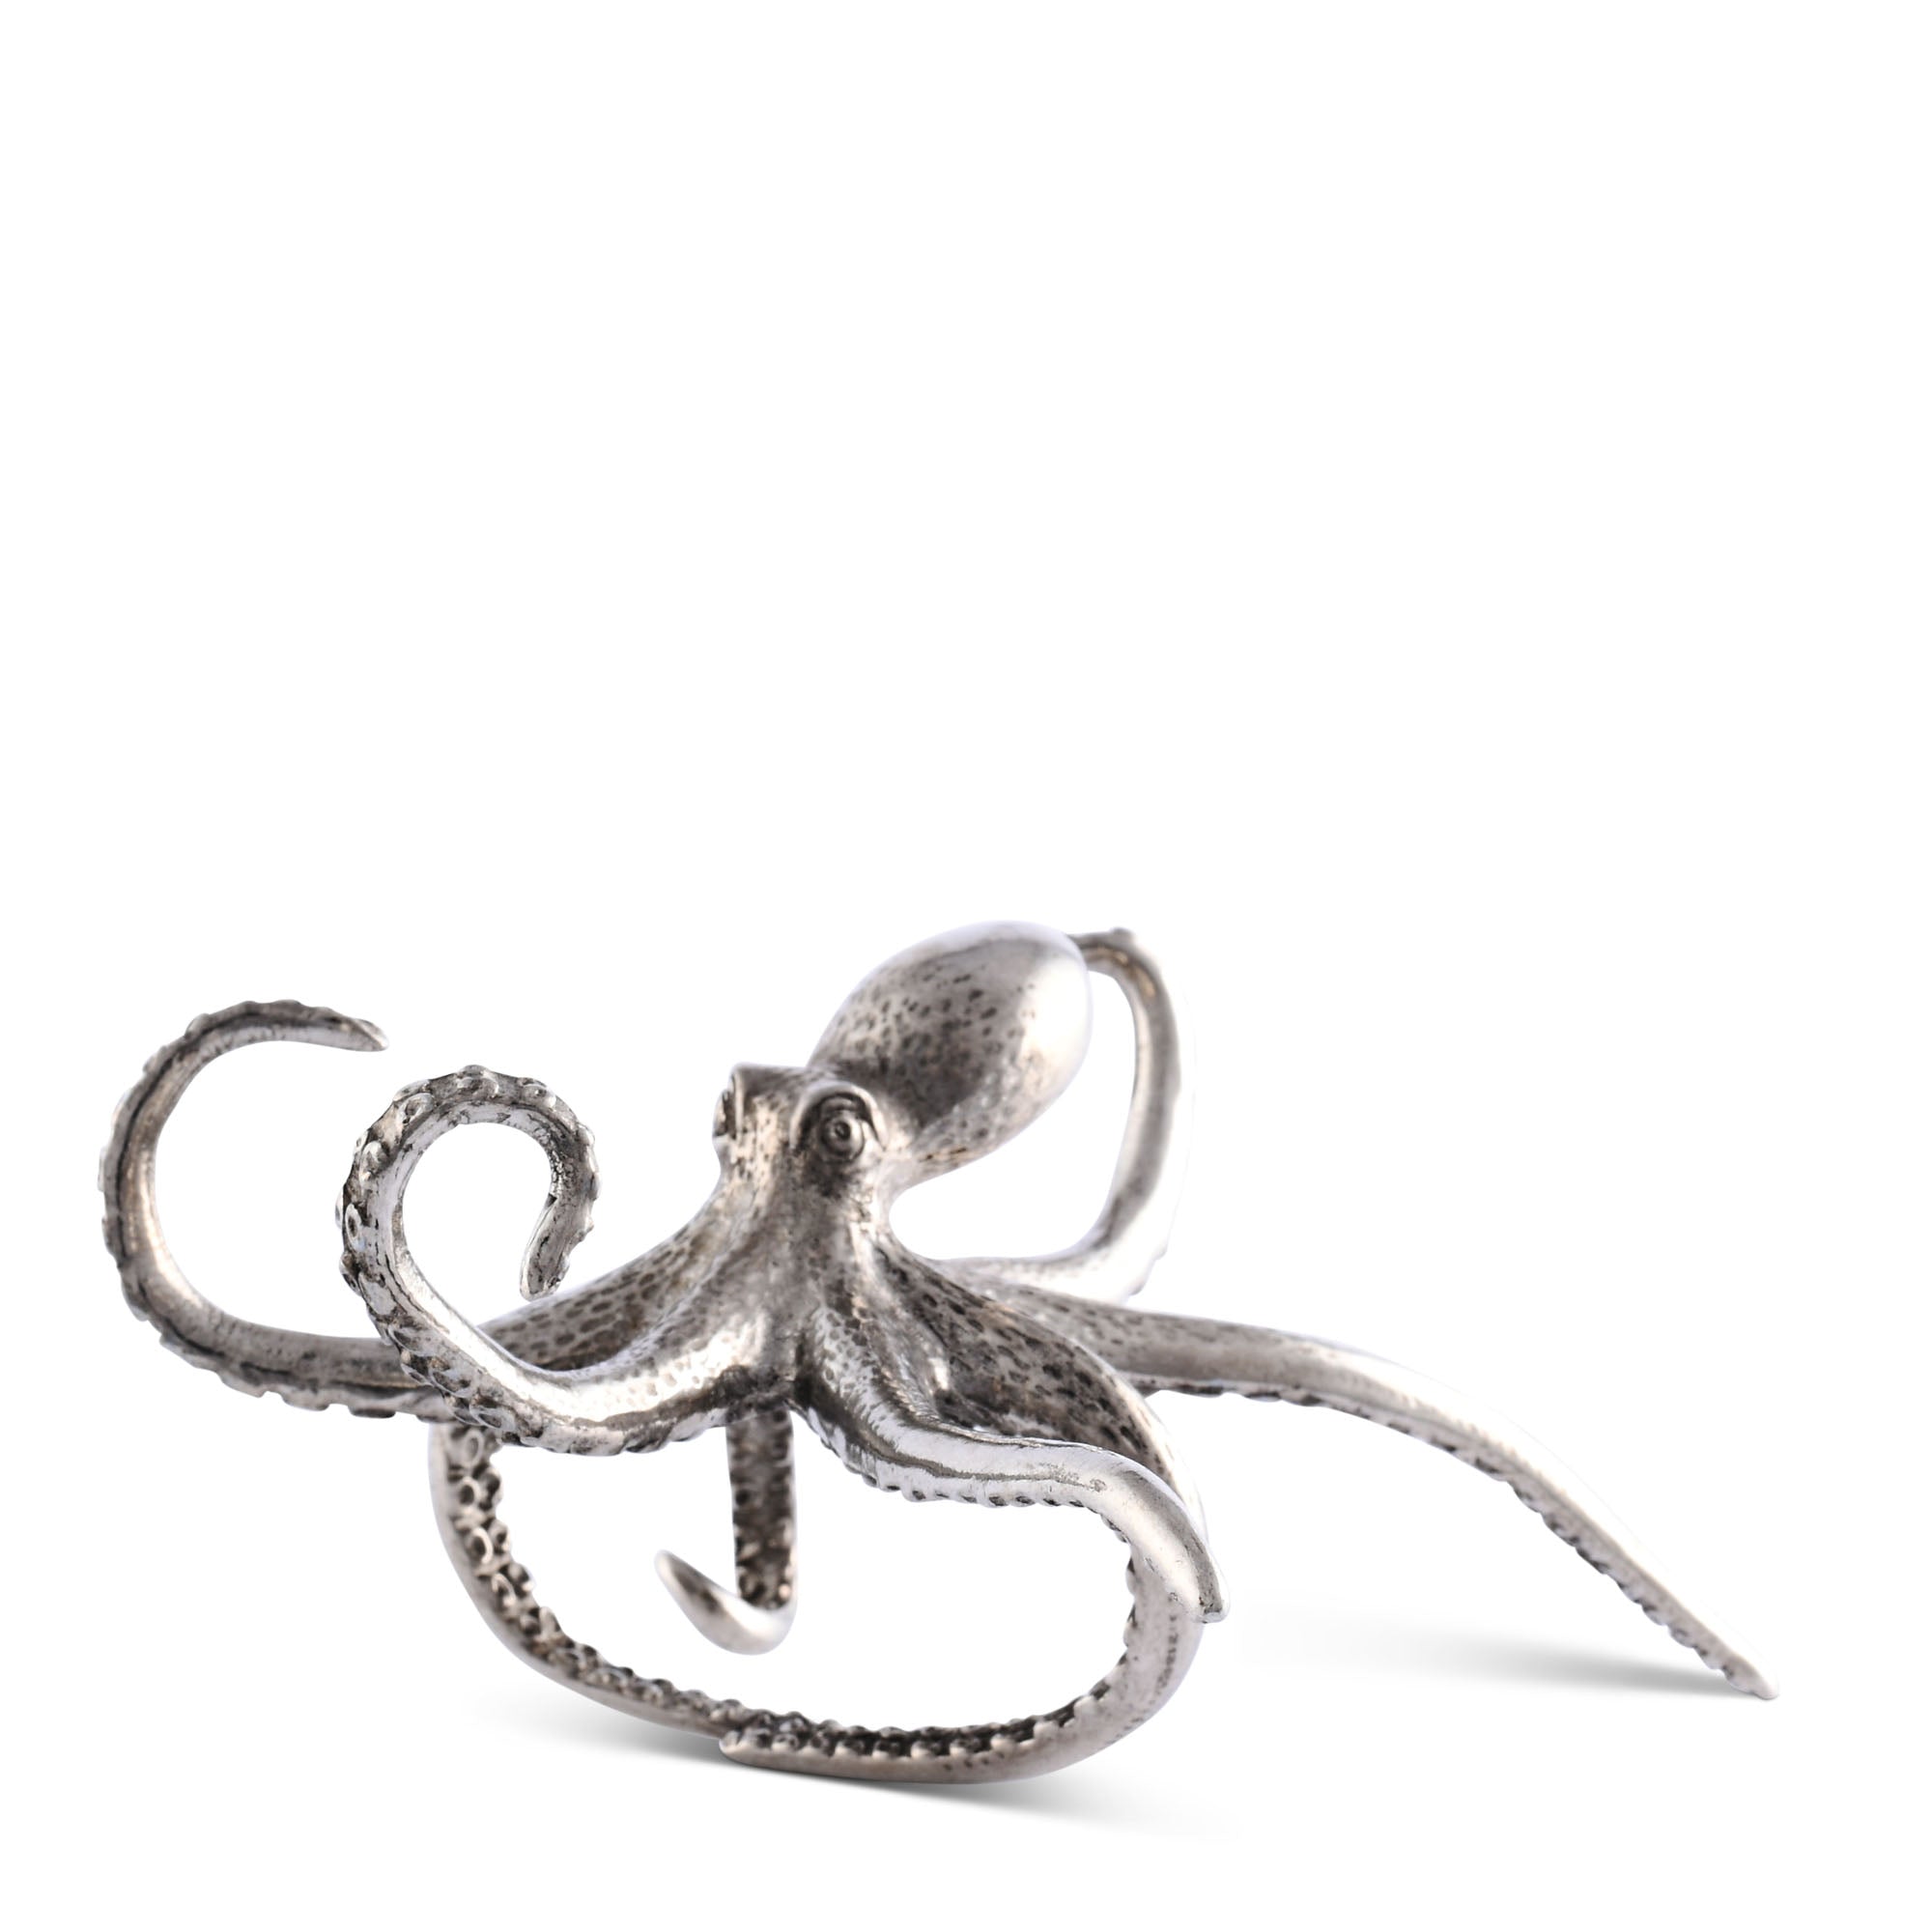 Vagabond House Pewter Octopus Napkin Ring Product Image